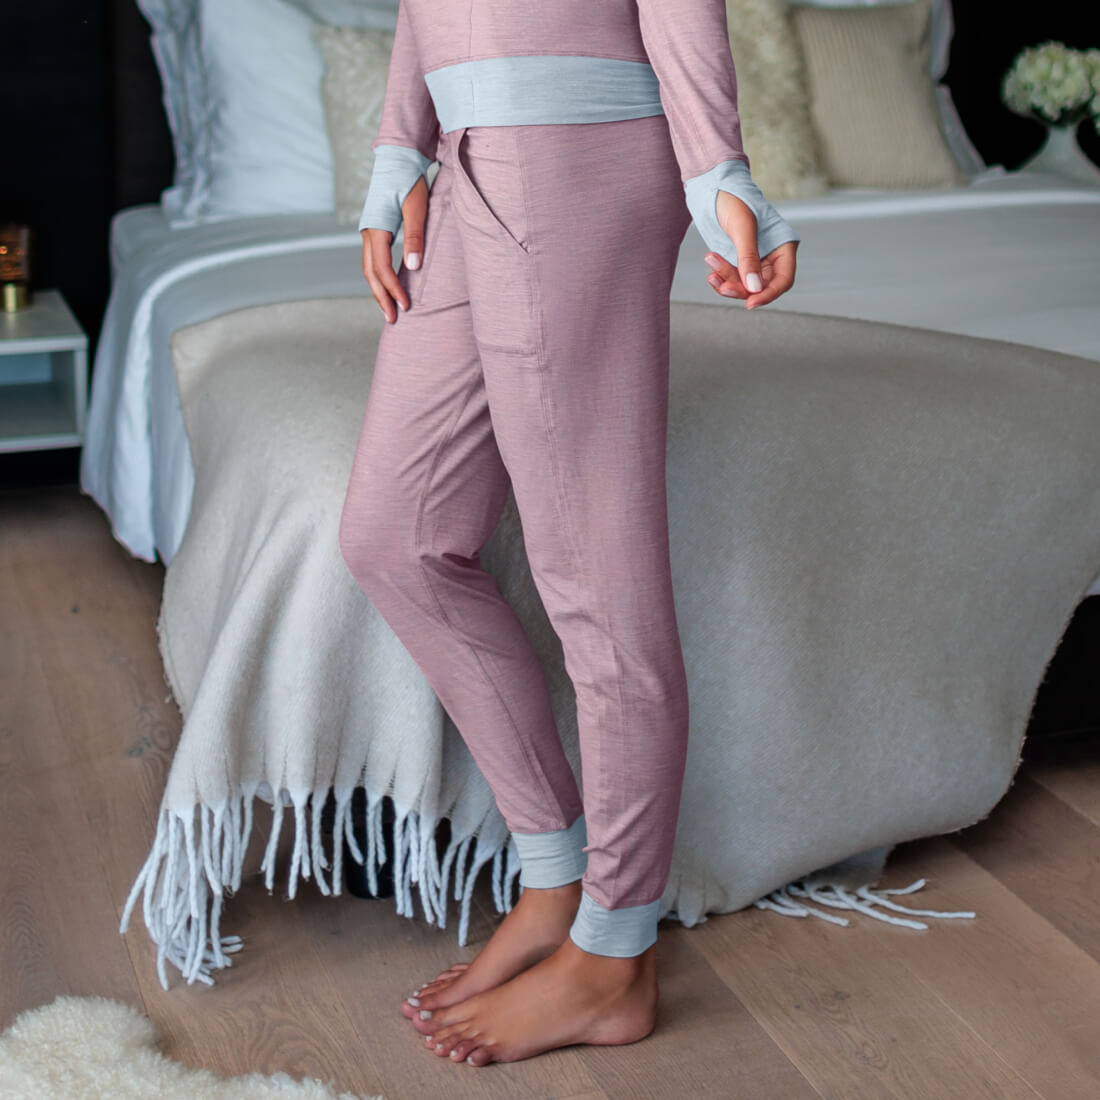 The softest merino wool pajama pants